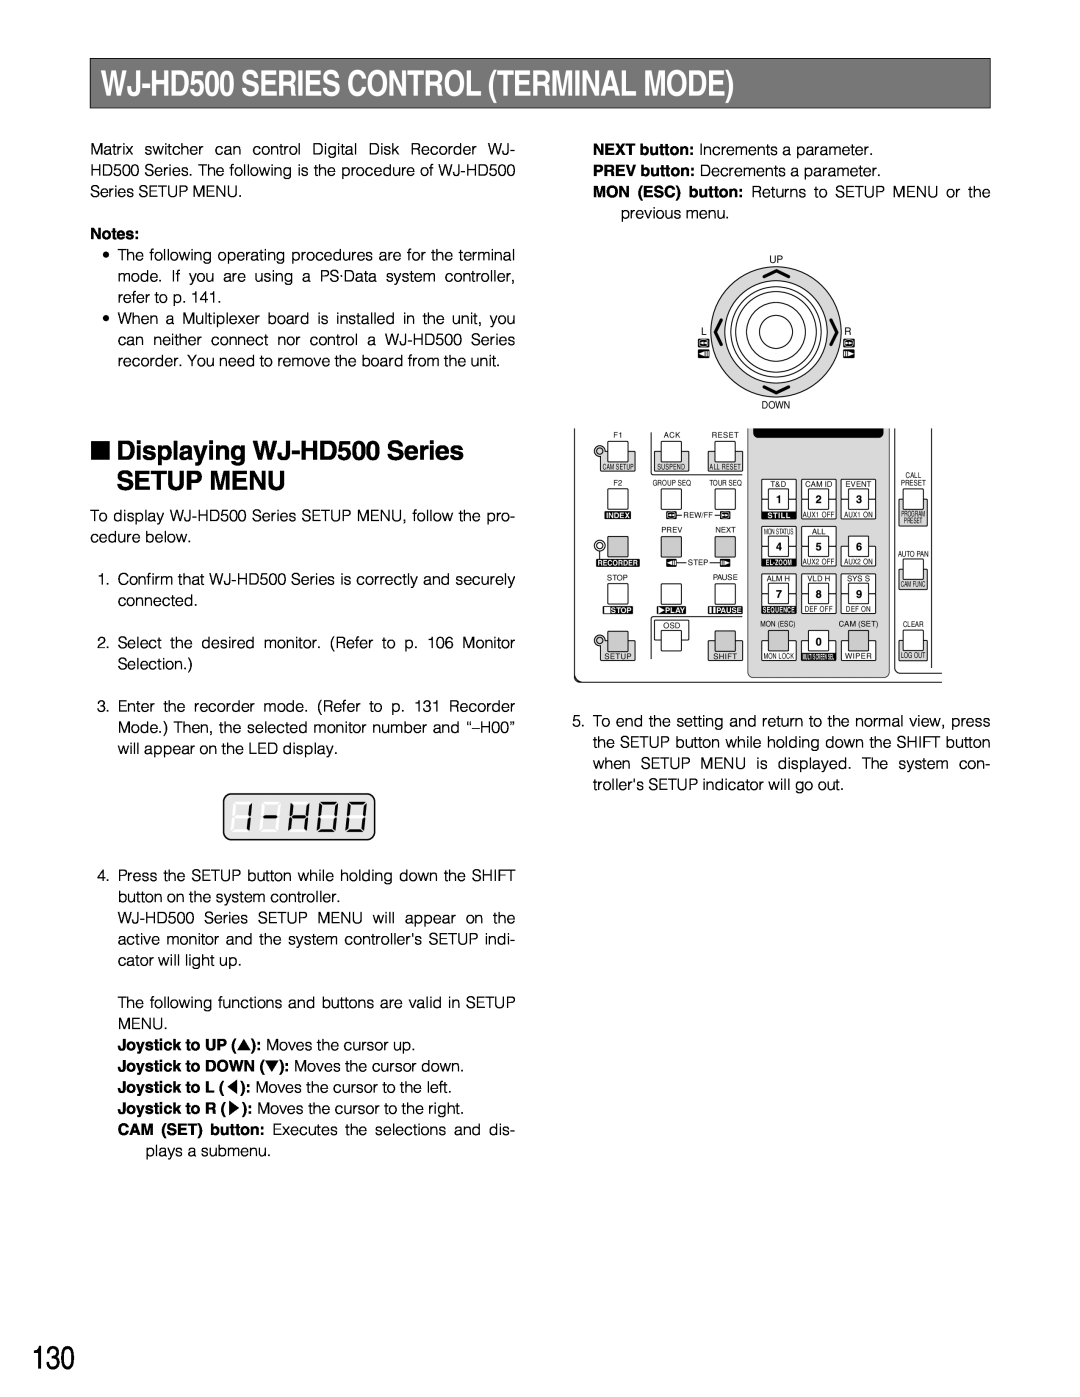 Panasonic WJ-SX150A manual WJ-HD500 SERIES CONTROL TERMINAL MODE, Displaying WJ-HD500 Series SETUP MENU 